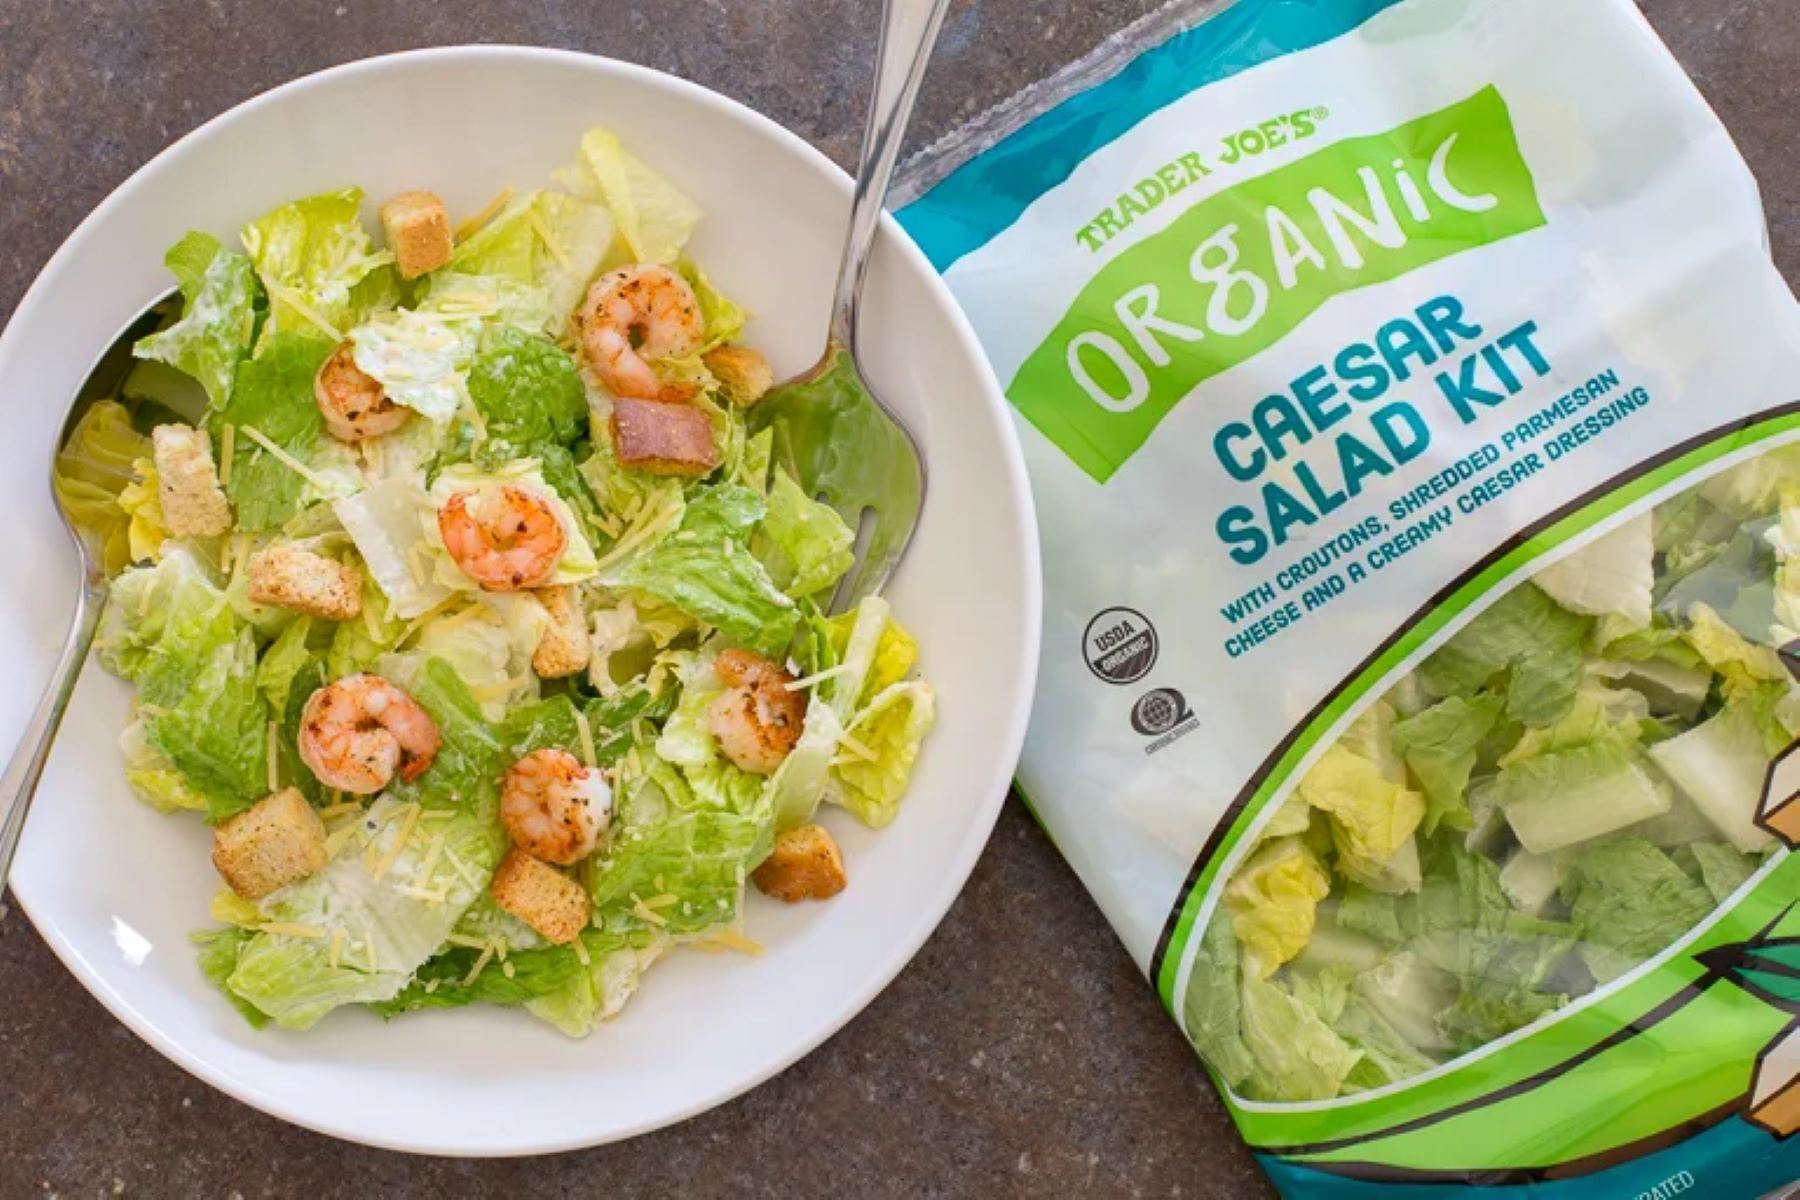 Trader Joe's salad kits: Organic Caesar salad kit